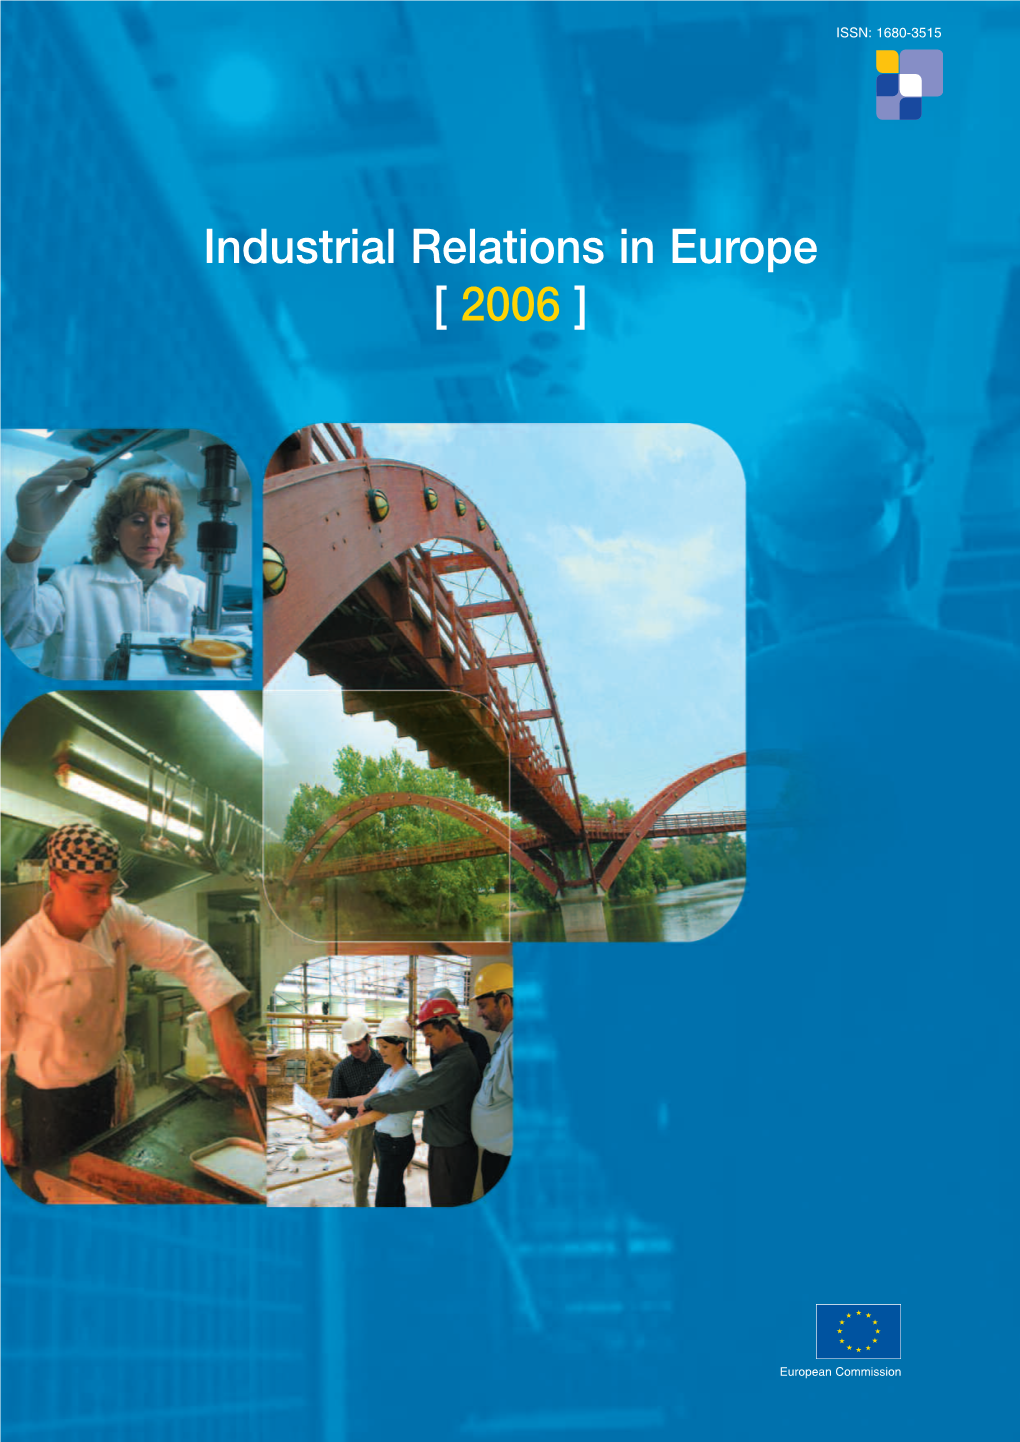 Industrial Relations in Europe 2006